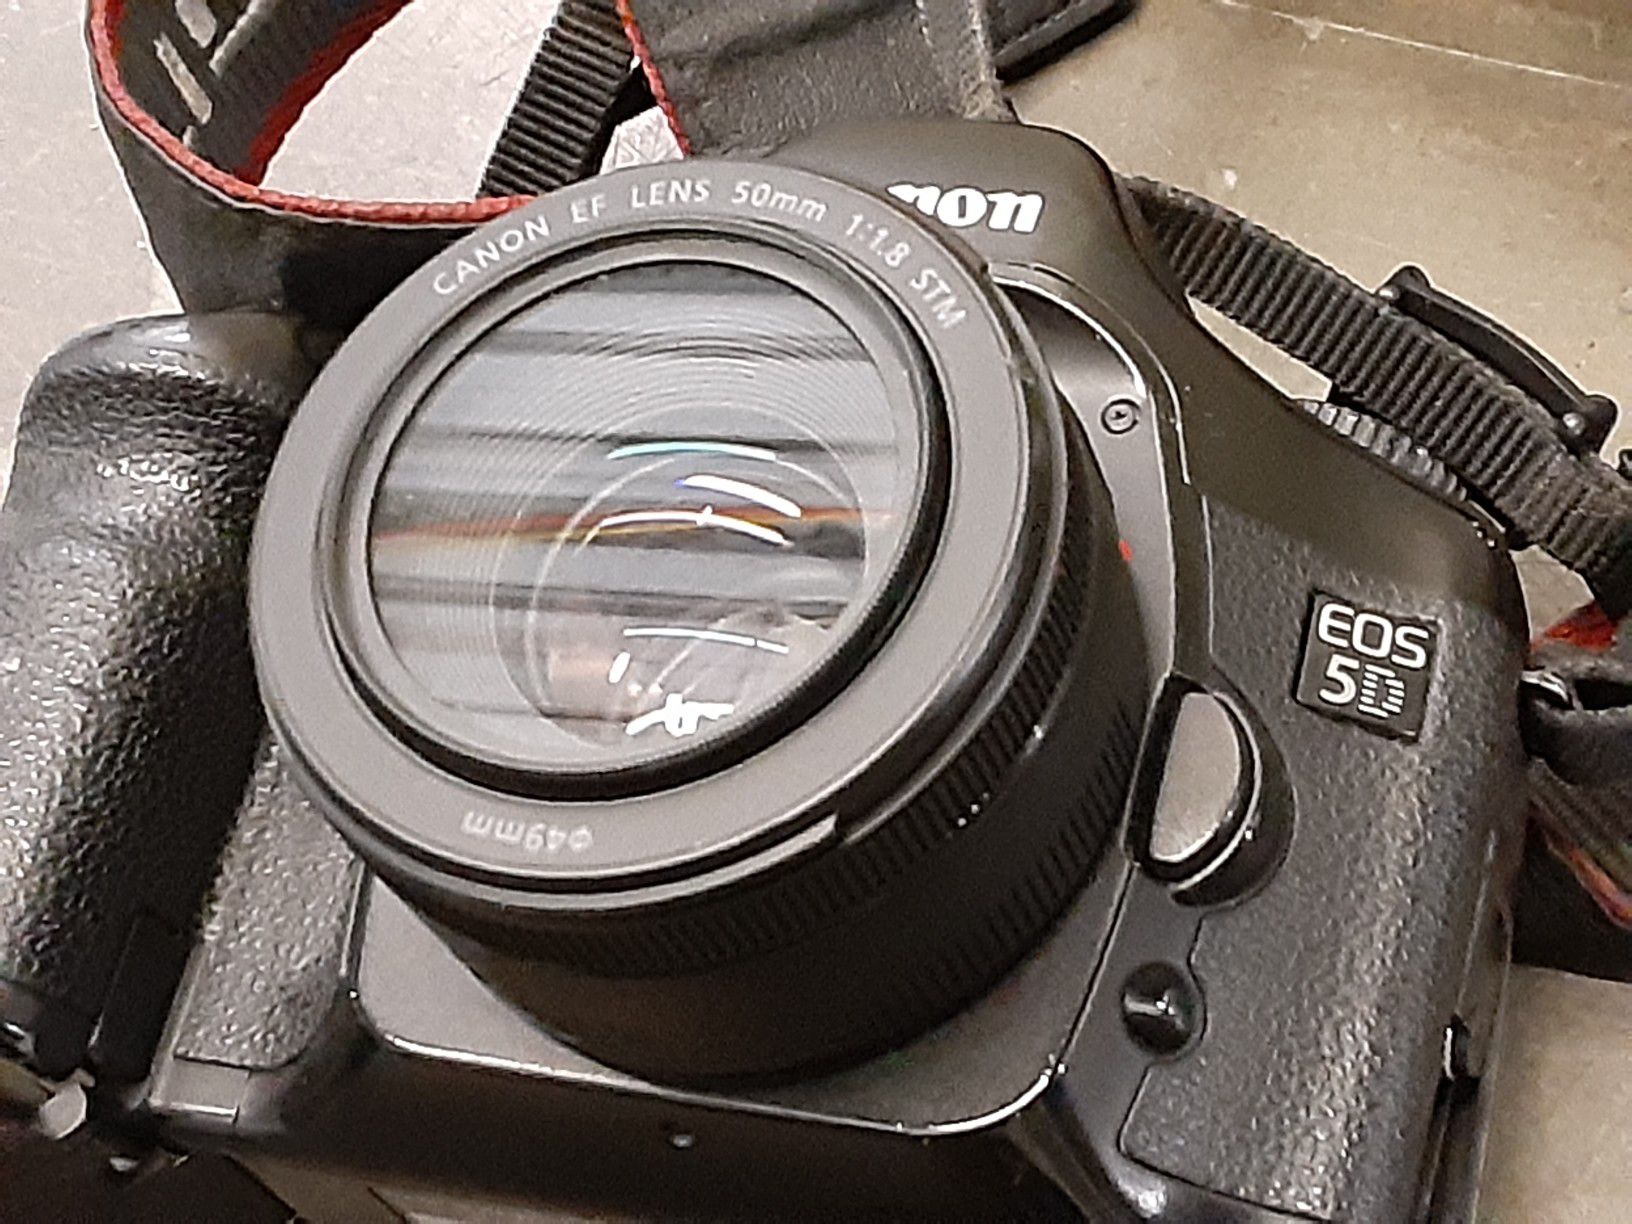 Canon EOS 5D SLR camera